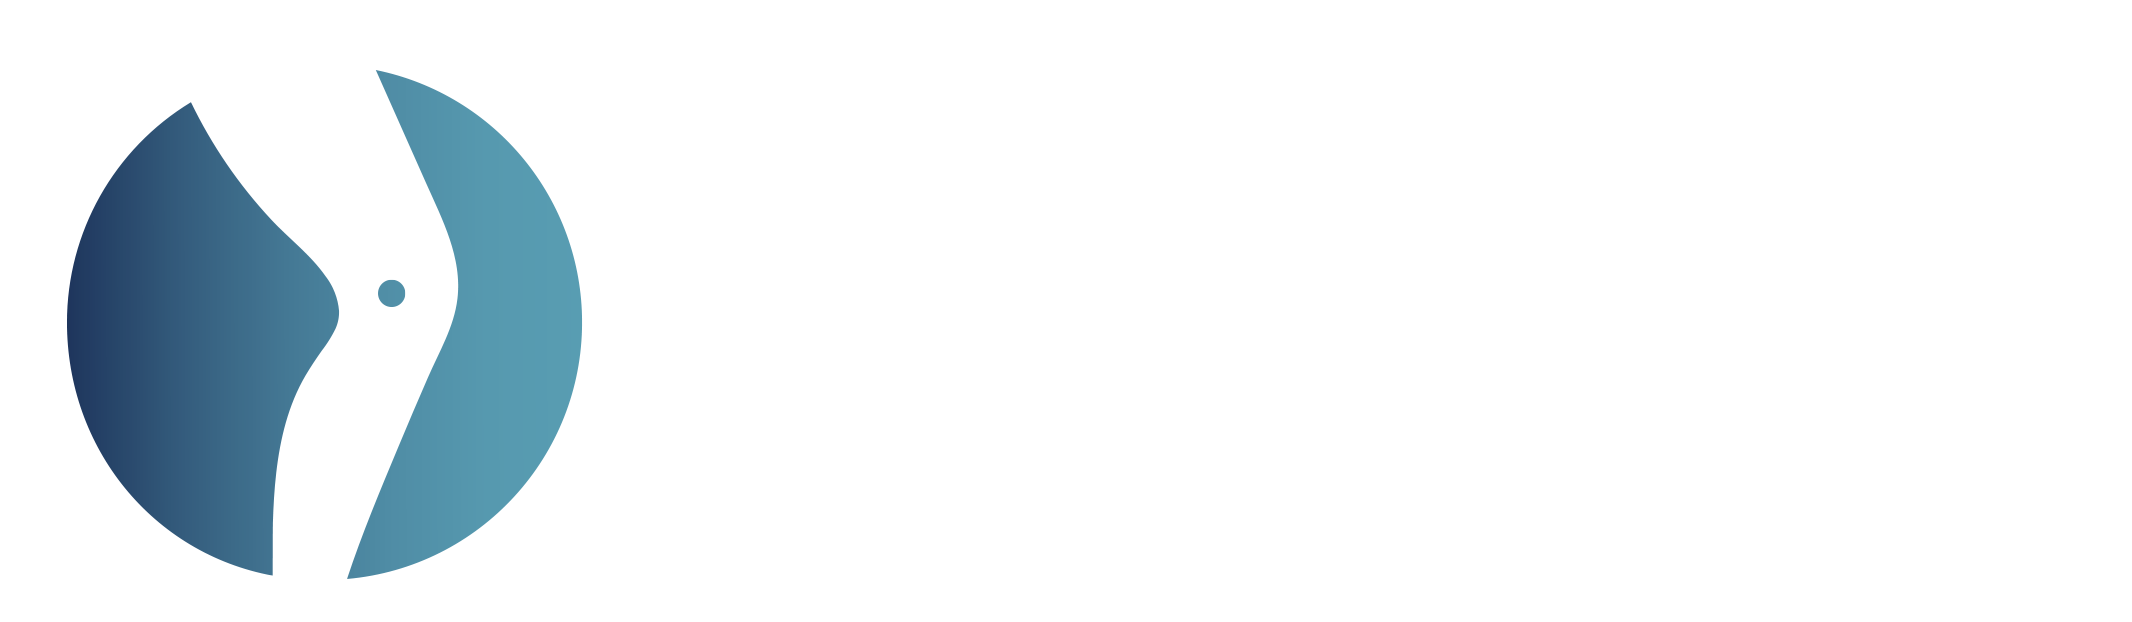 Ortopedia Nacional